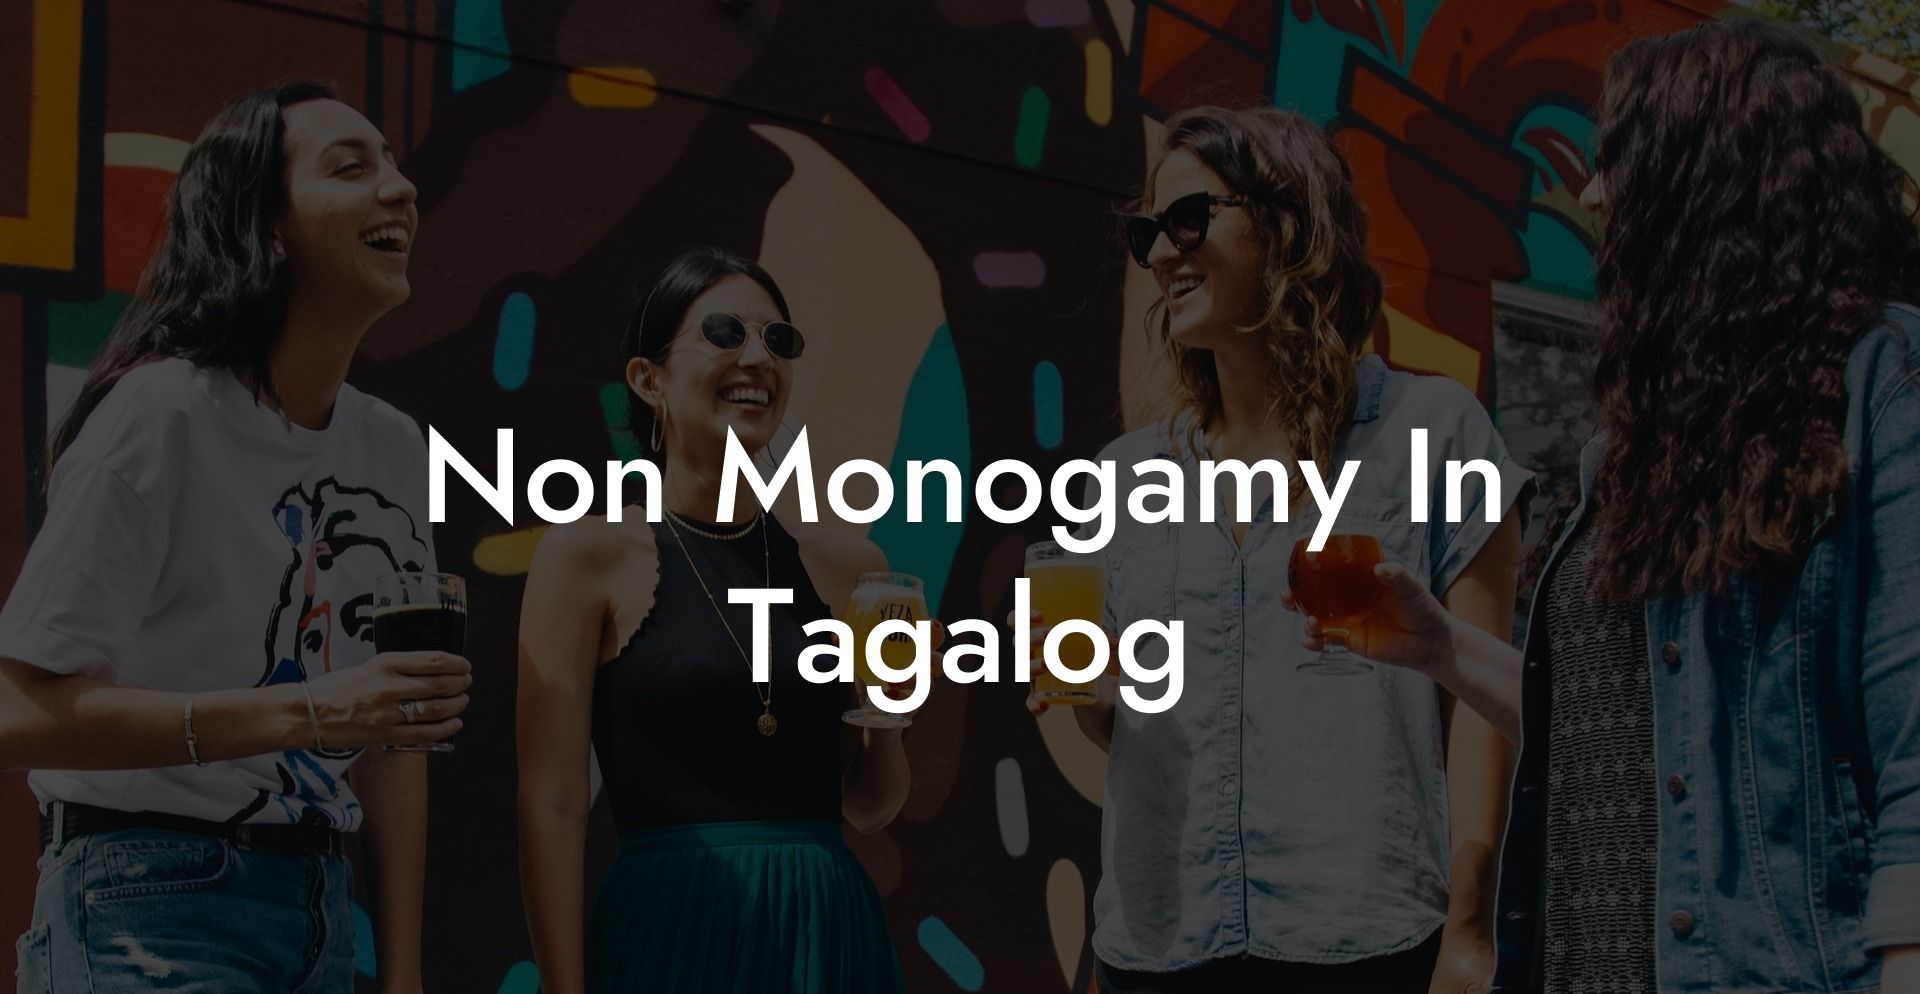 Non Monogamy In Tagalog